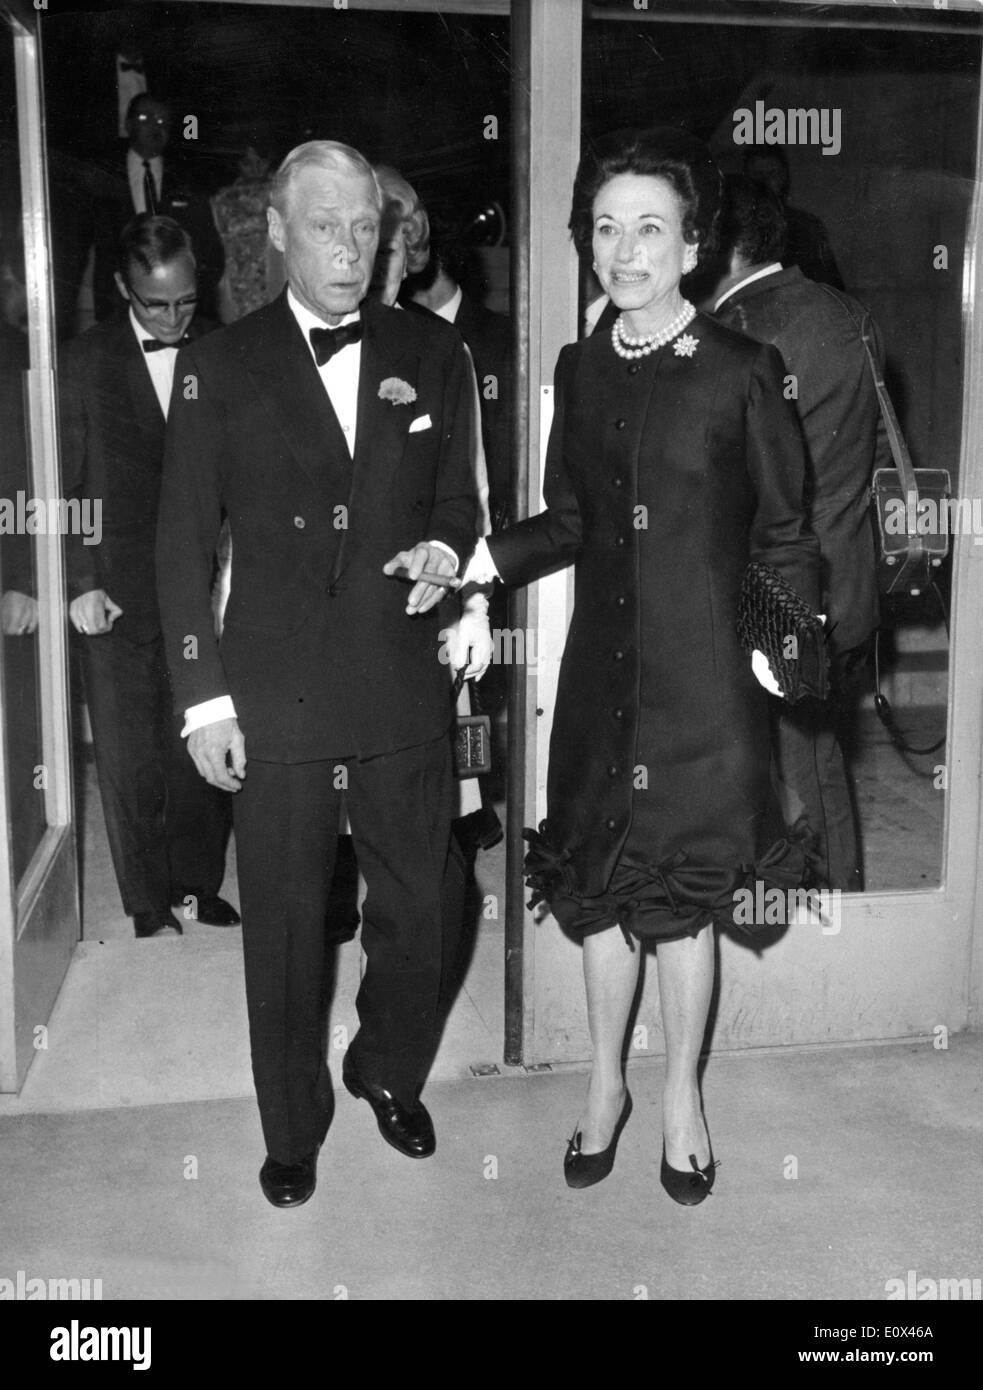 The Duke and Duchess of Windsor leave the cinema Stock Photo